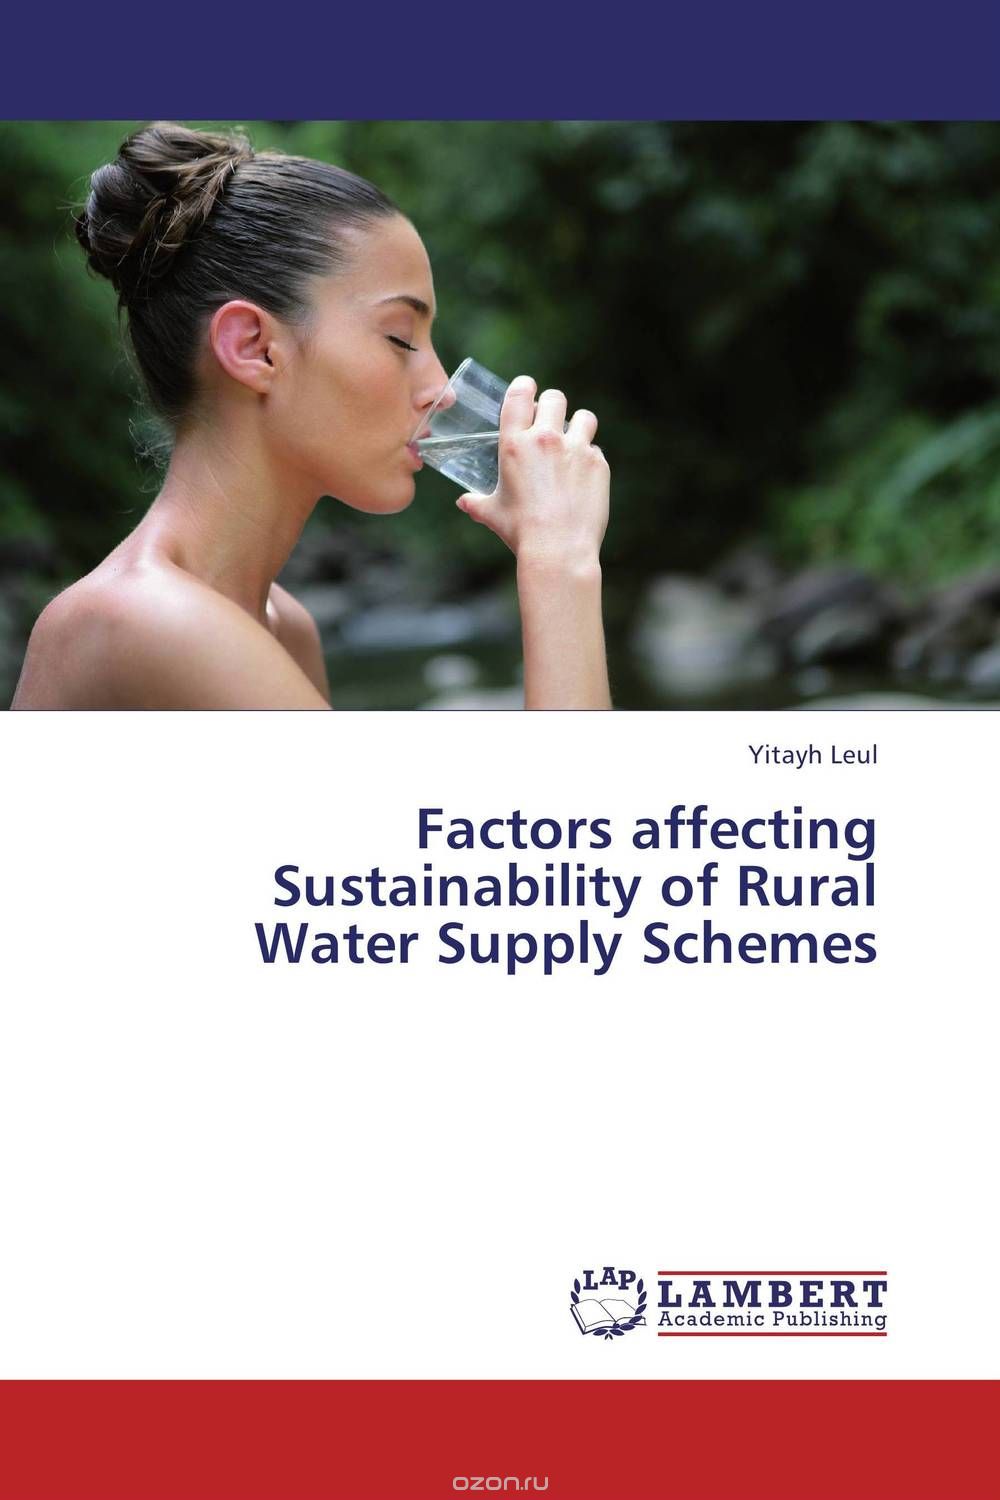 Скачать книгу "Factors affecting Sustainability of Rural Water Supply Schemes"